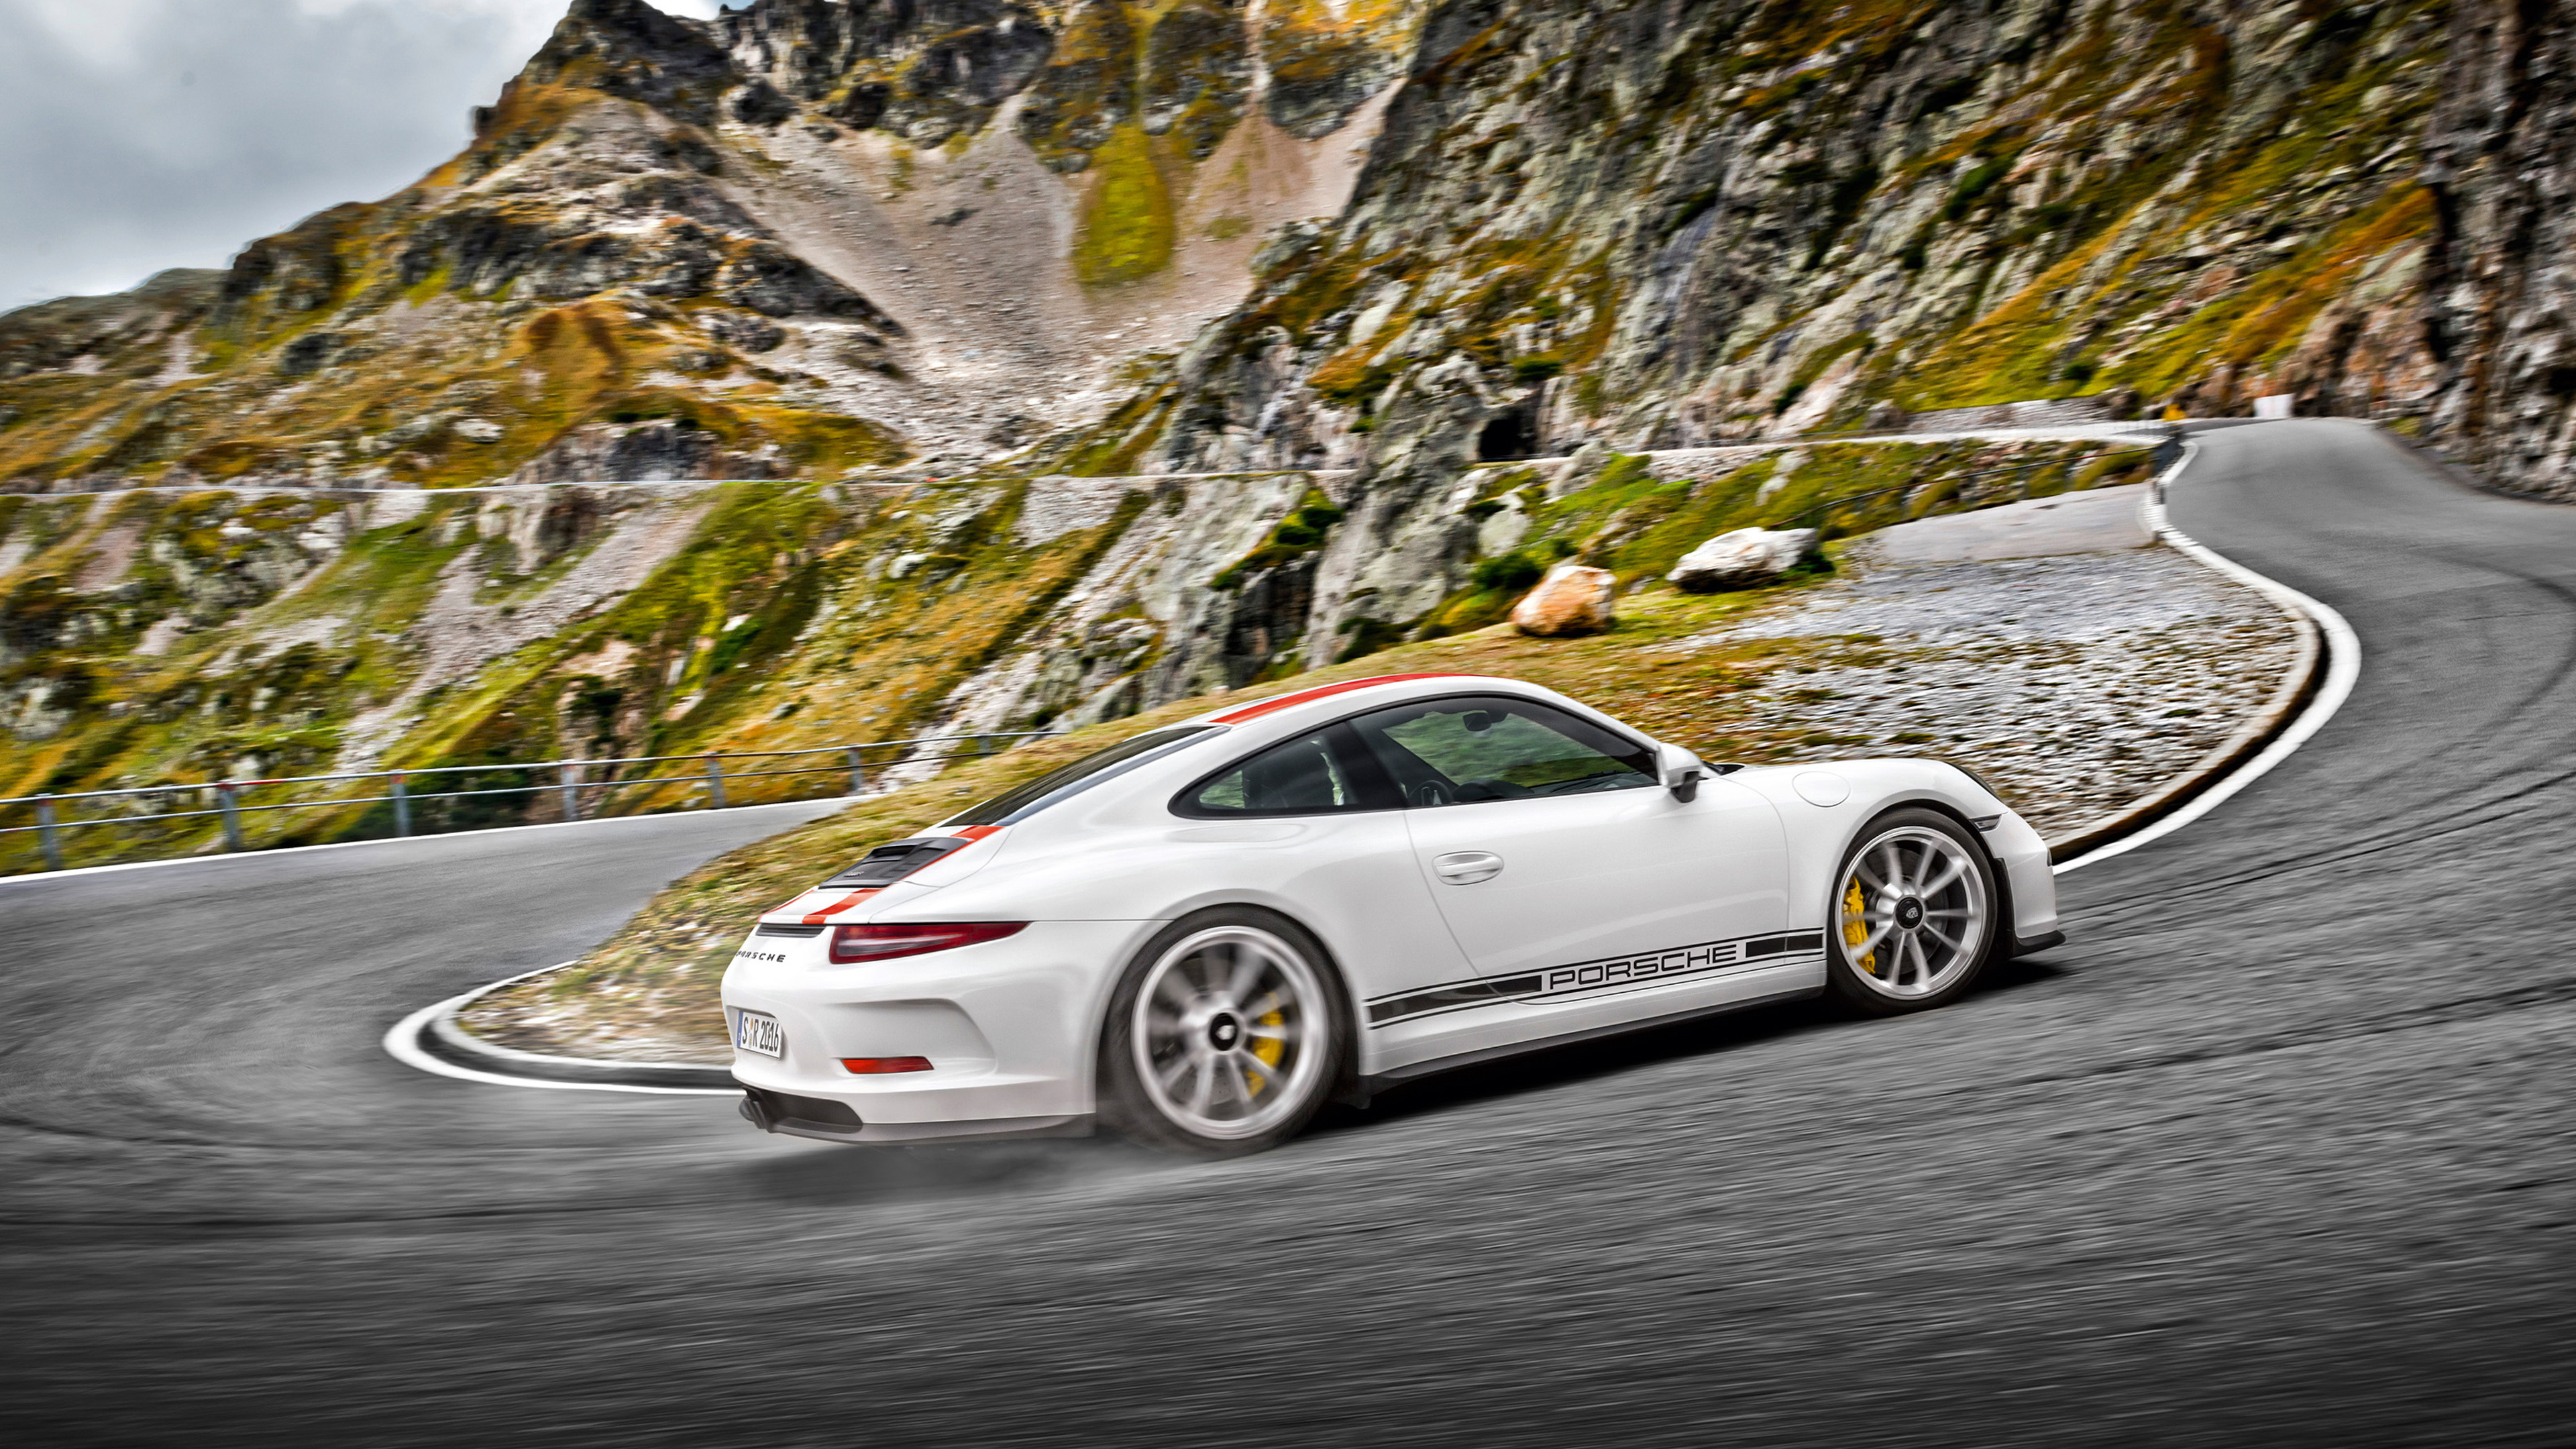 Porsche 911 Blanco en la Carretera. Wallpaper in 3840x2160 Resolution